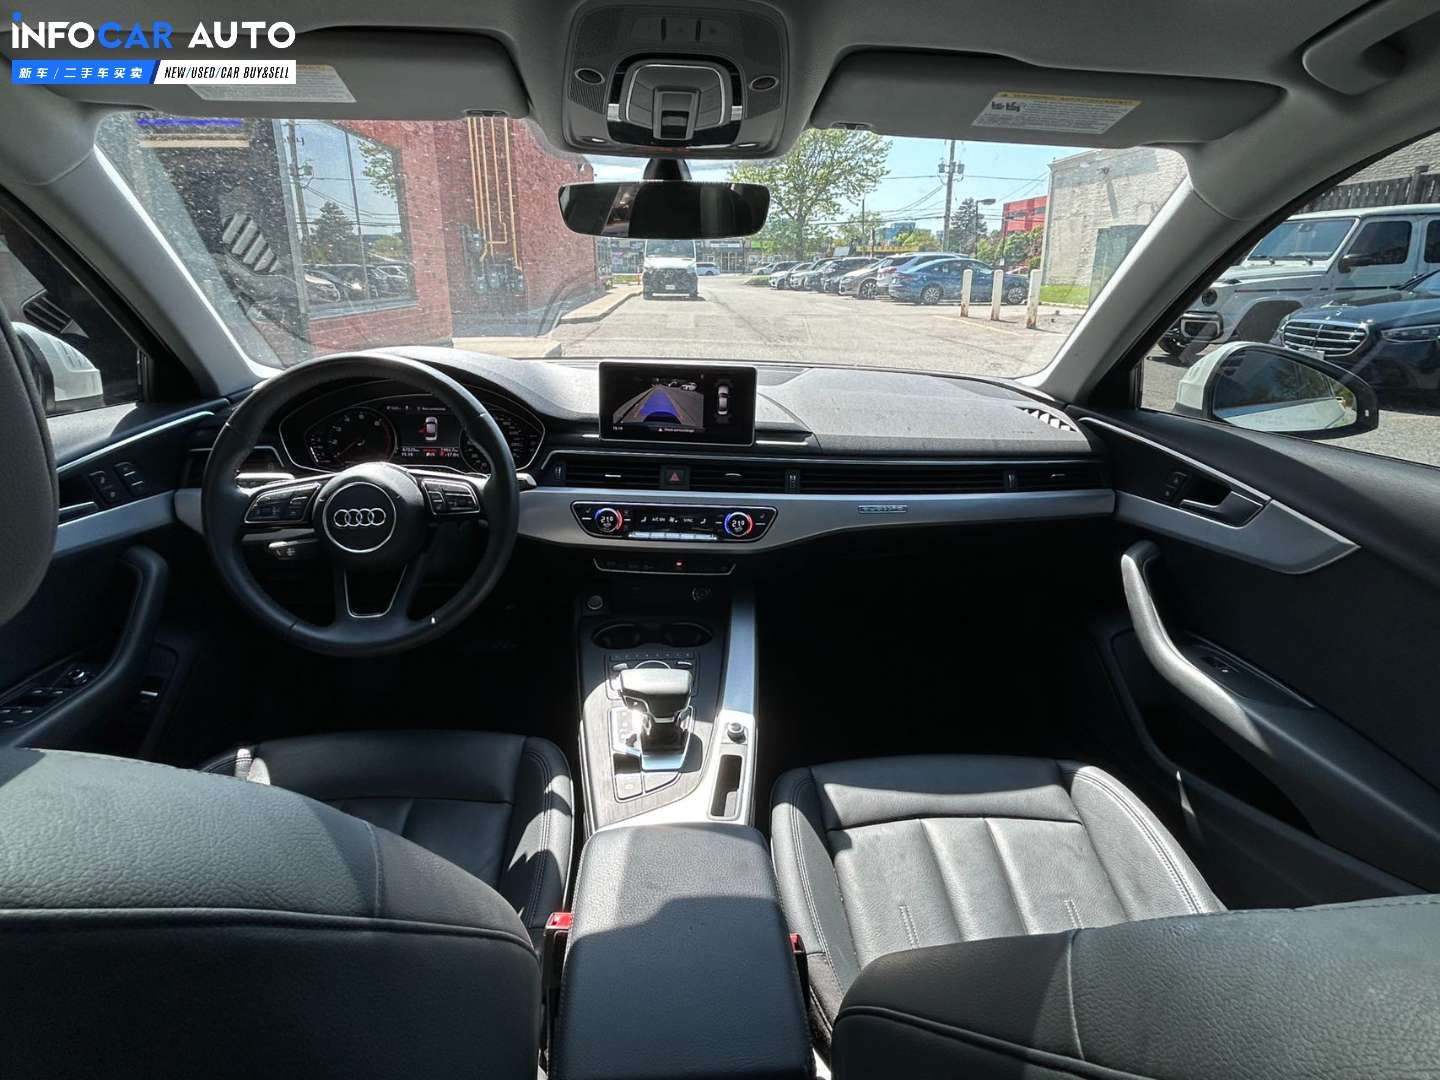 2019 Audi A4 PROGRESSIV - INFOCAR - Toronto Auto Trading Platform